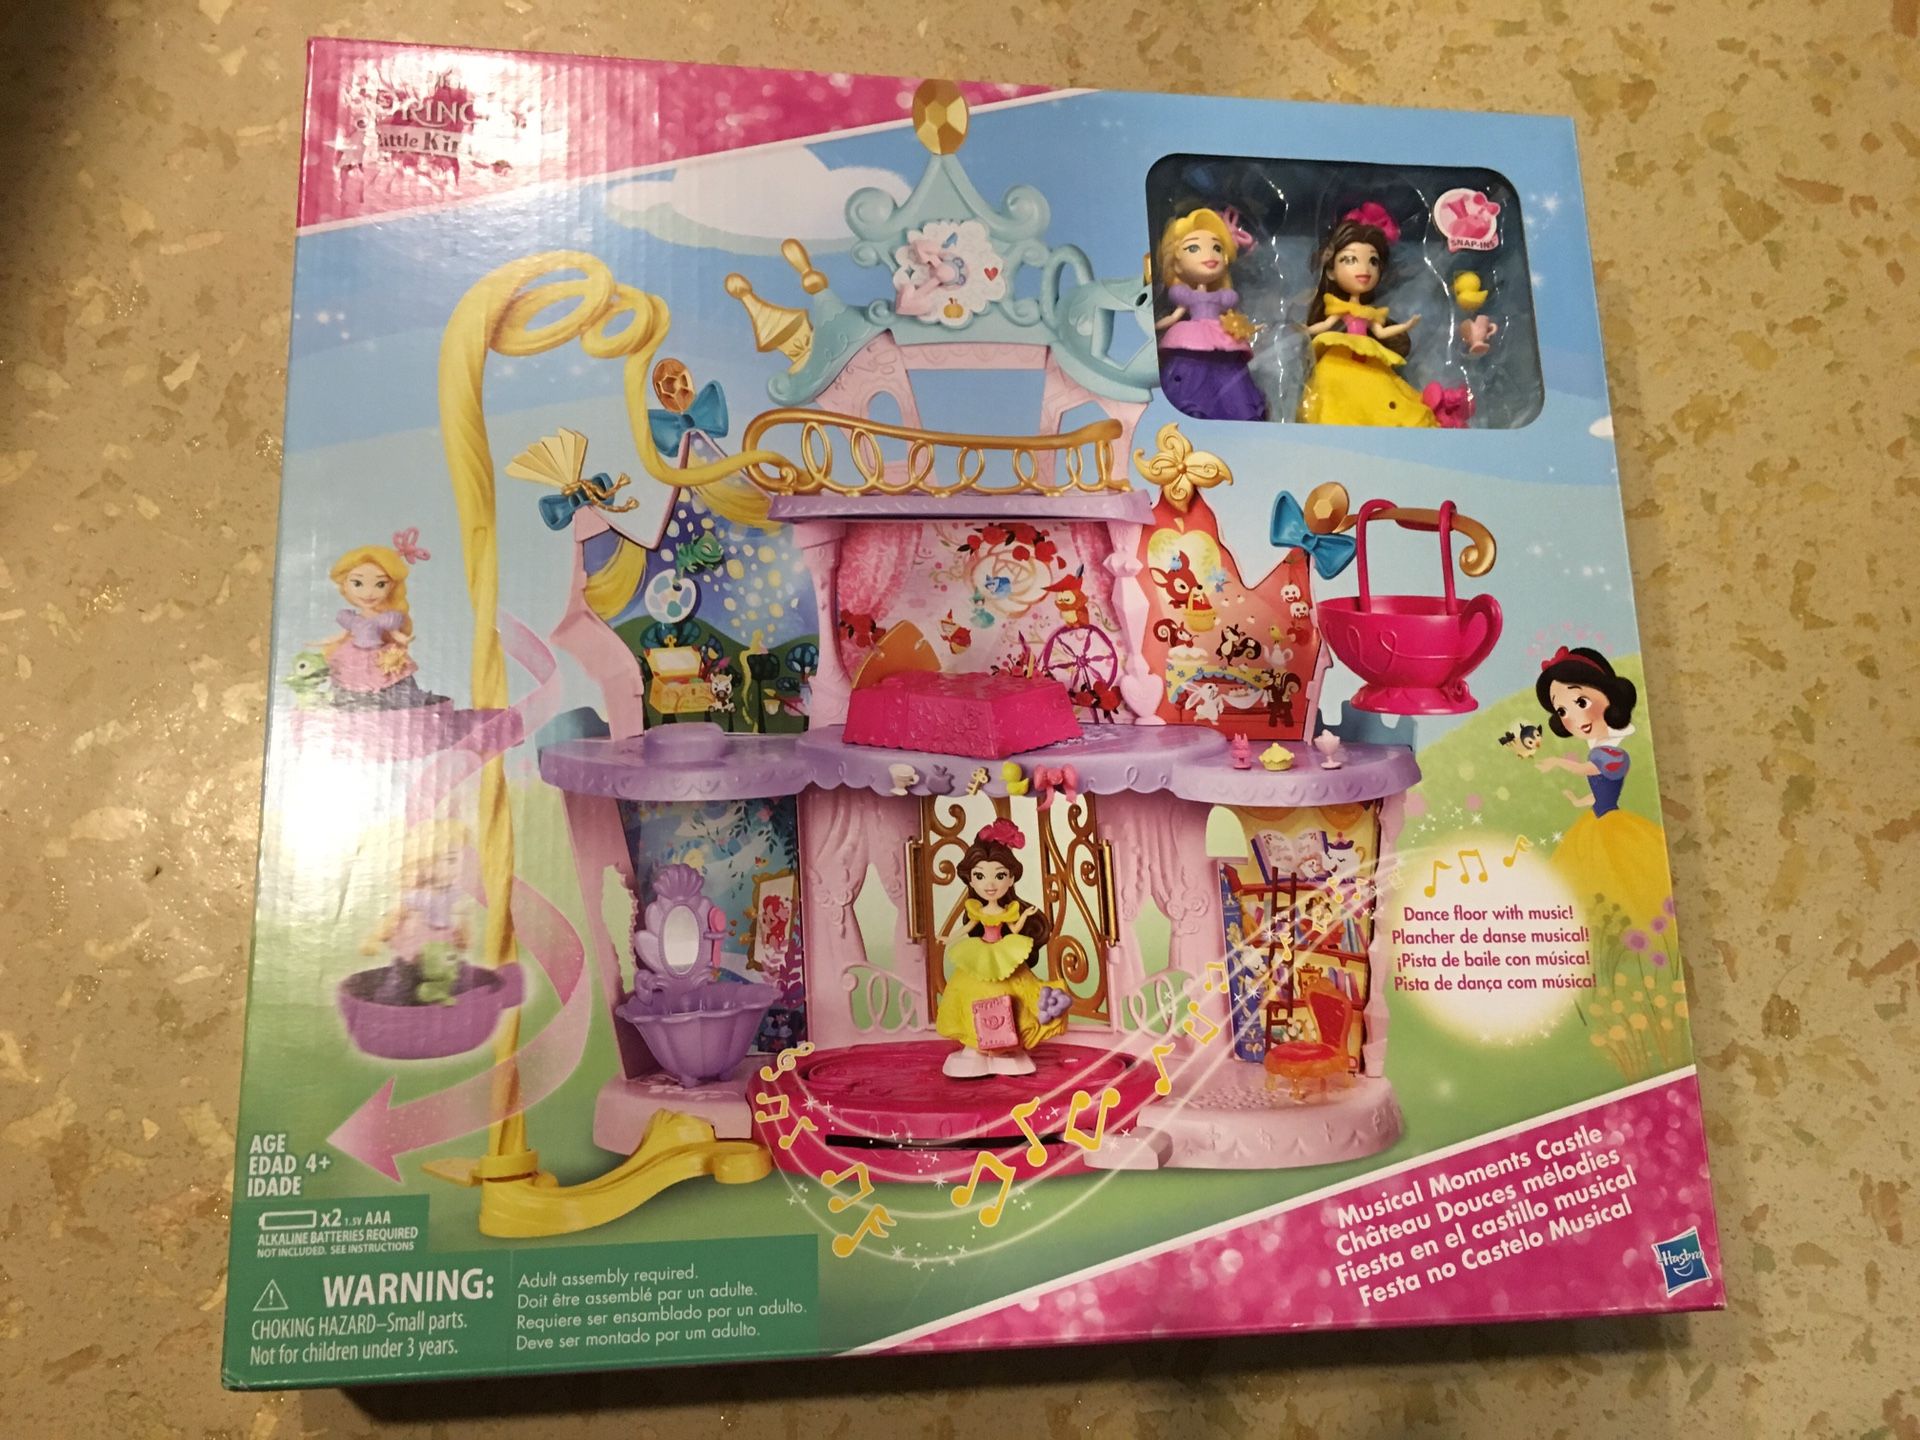 Disney Princess Little Kingdom Musical Moments Castle